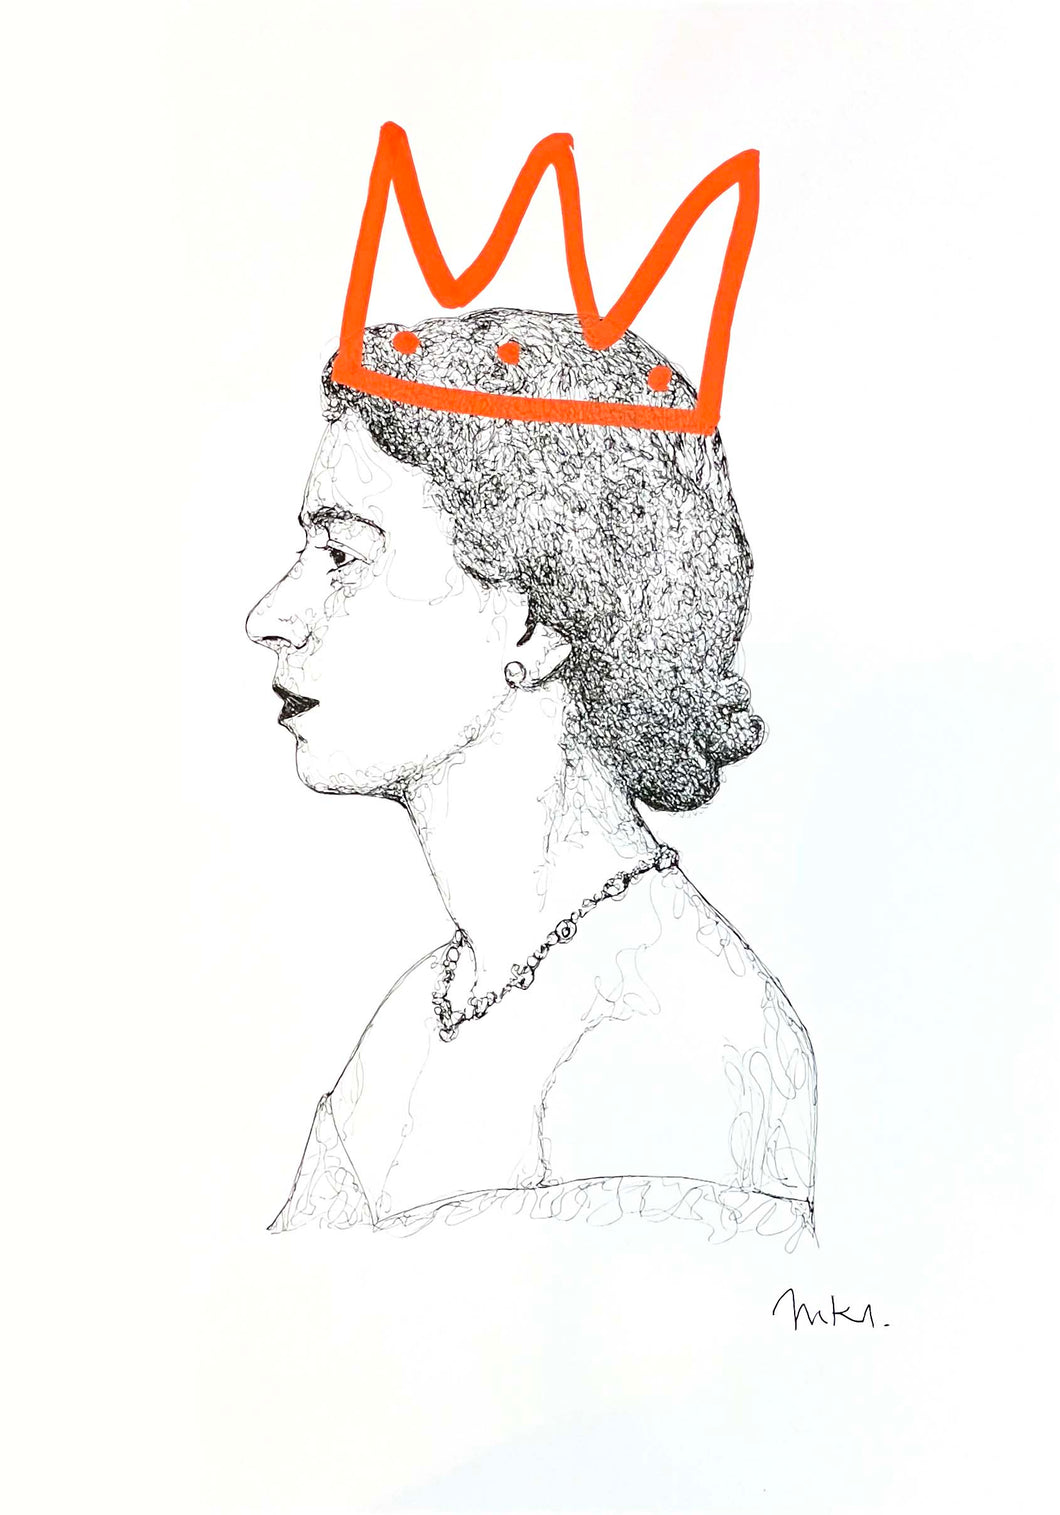 Niki Crafford - One Line Drawing - Her Majesty - Orange Crown